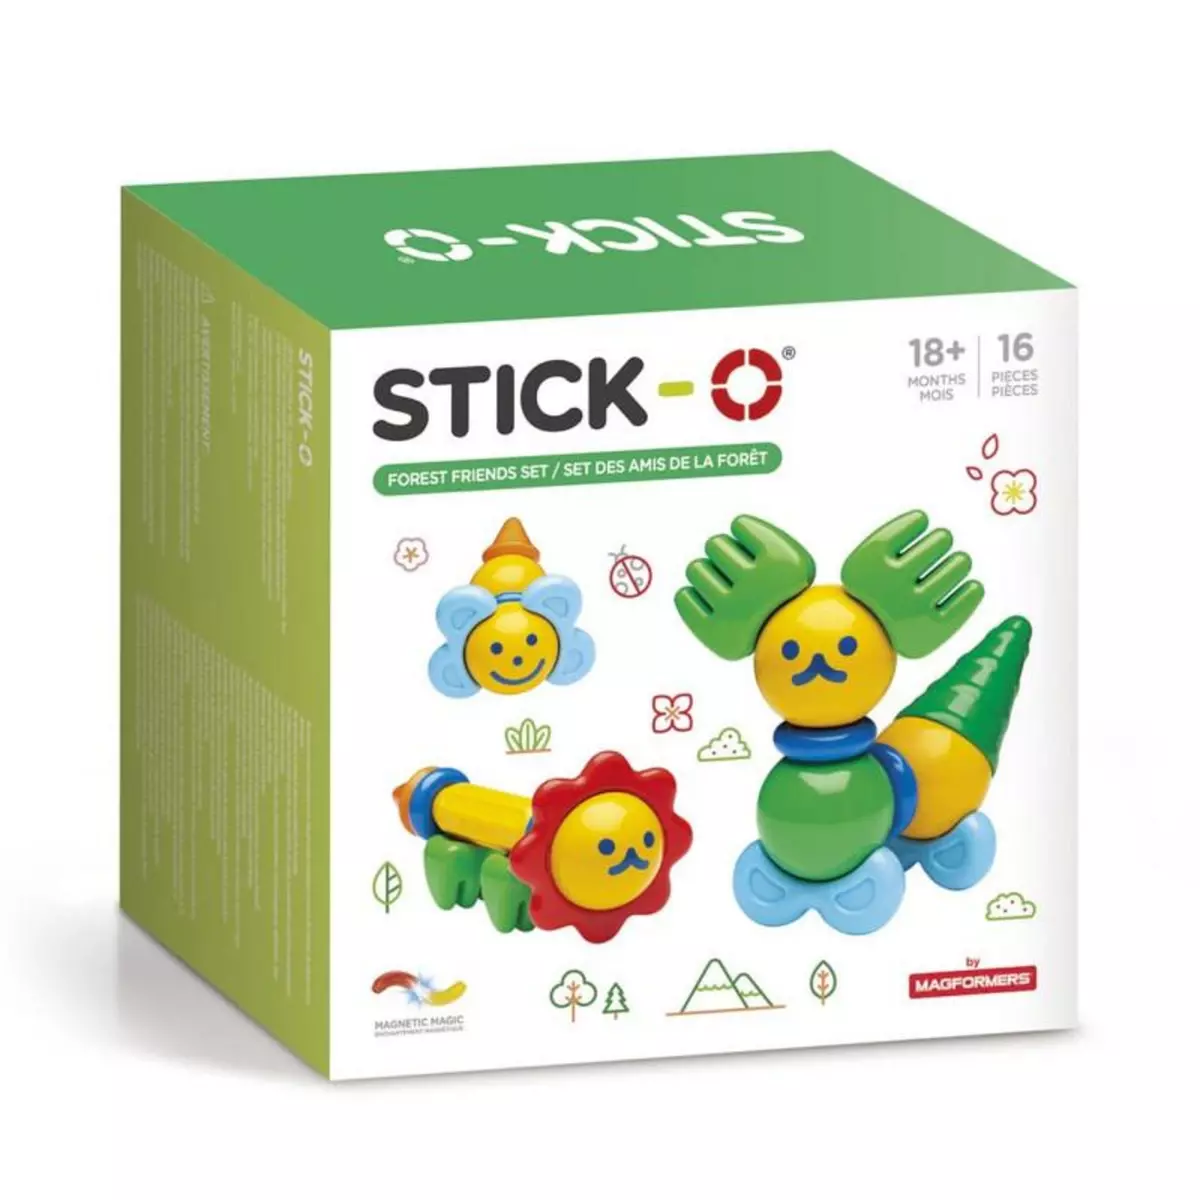 STICK-O Stick-O Forest Friends Set, 16 pcs.